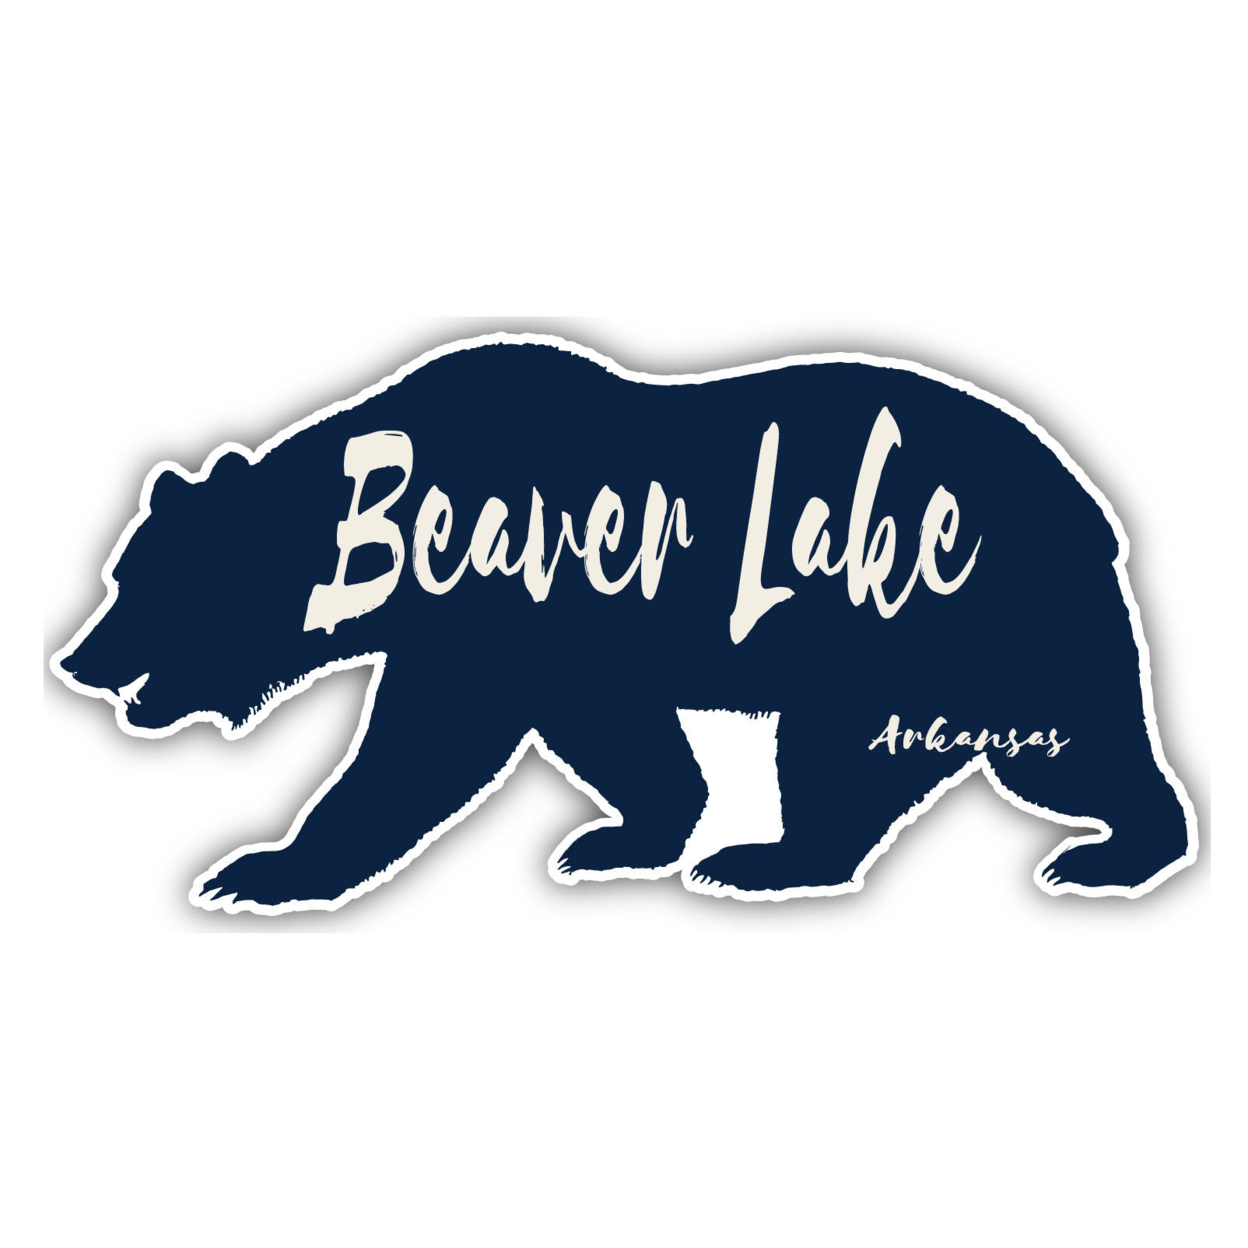 Beaver Lake Arkansas Souvenir Decorative Stickers (Choose Theme And Size) - Single Unit, 12-Inch, Tent